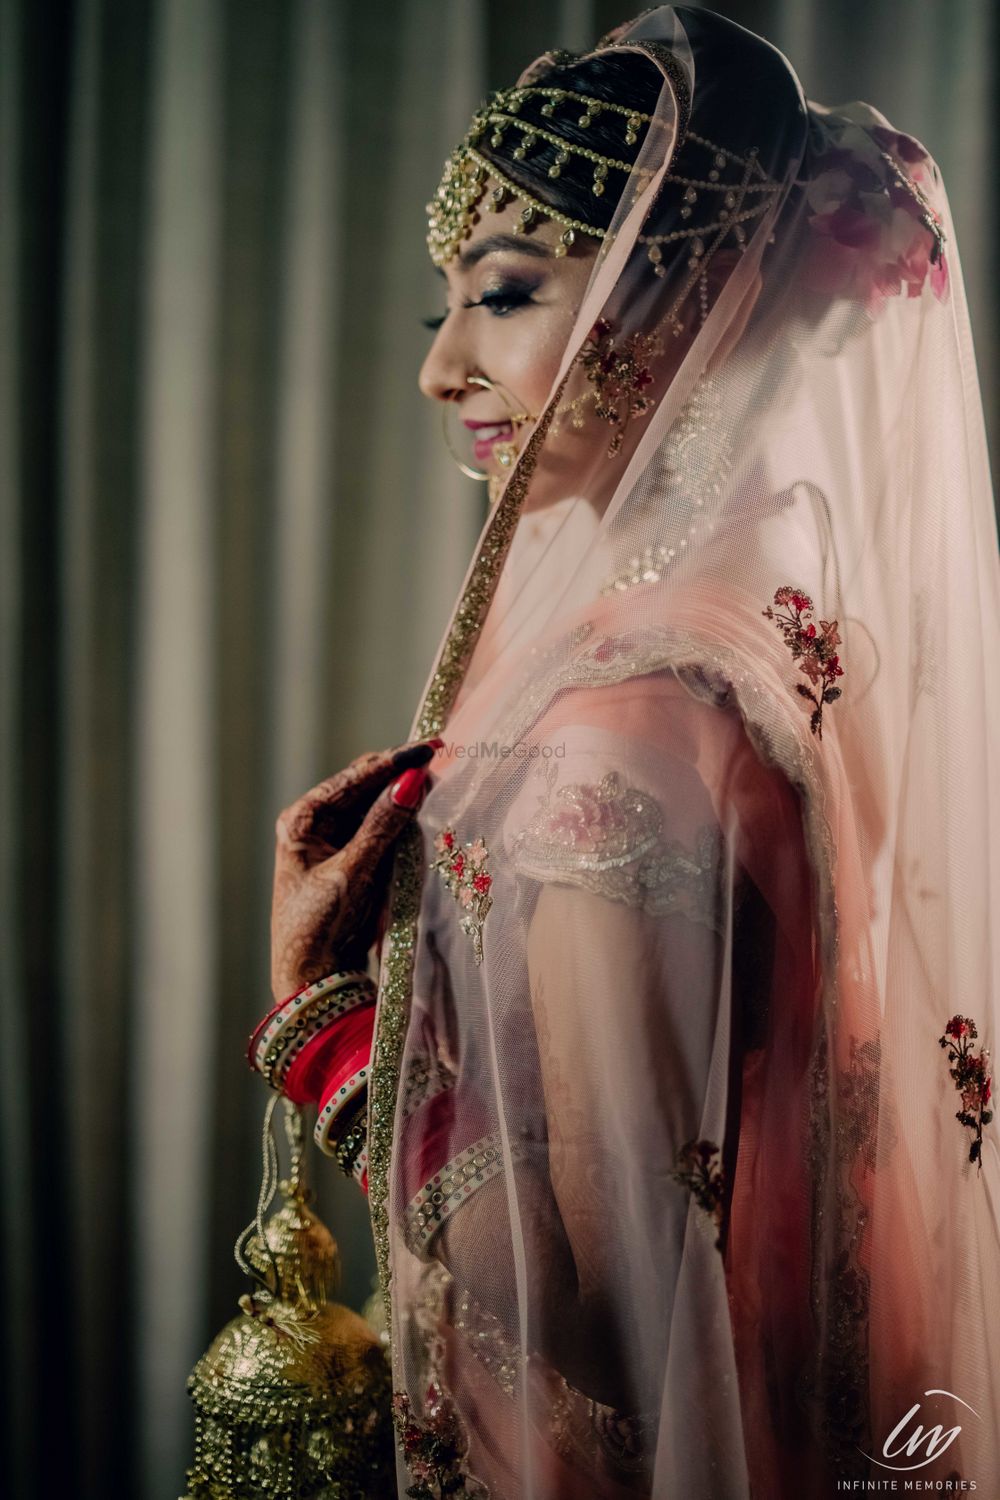 Photo of A bride smiling through her veil.